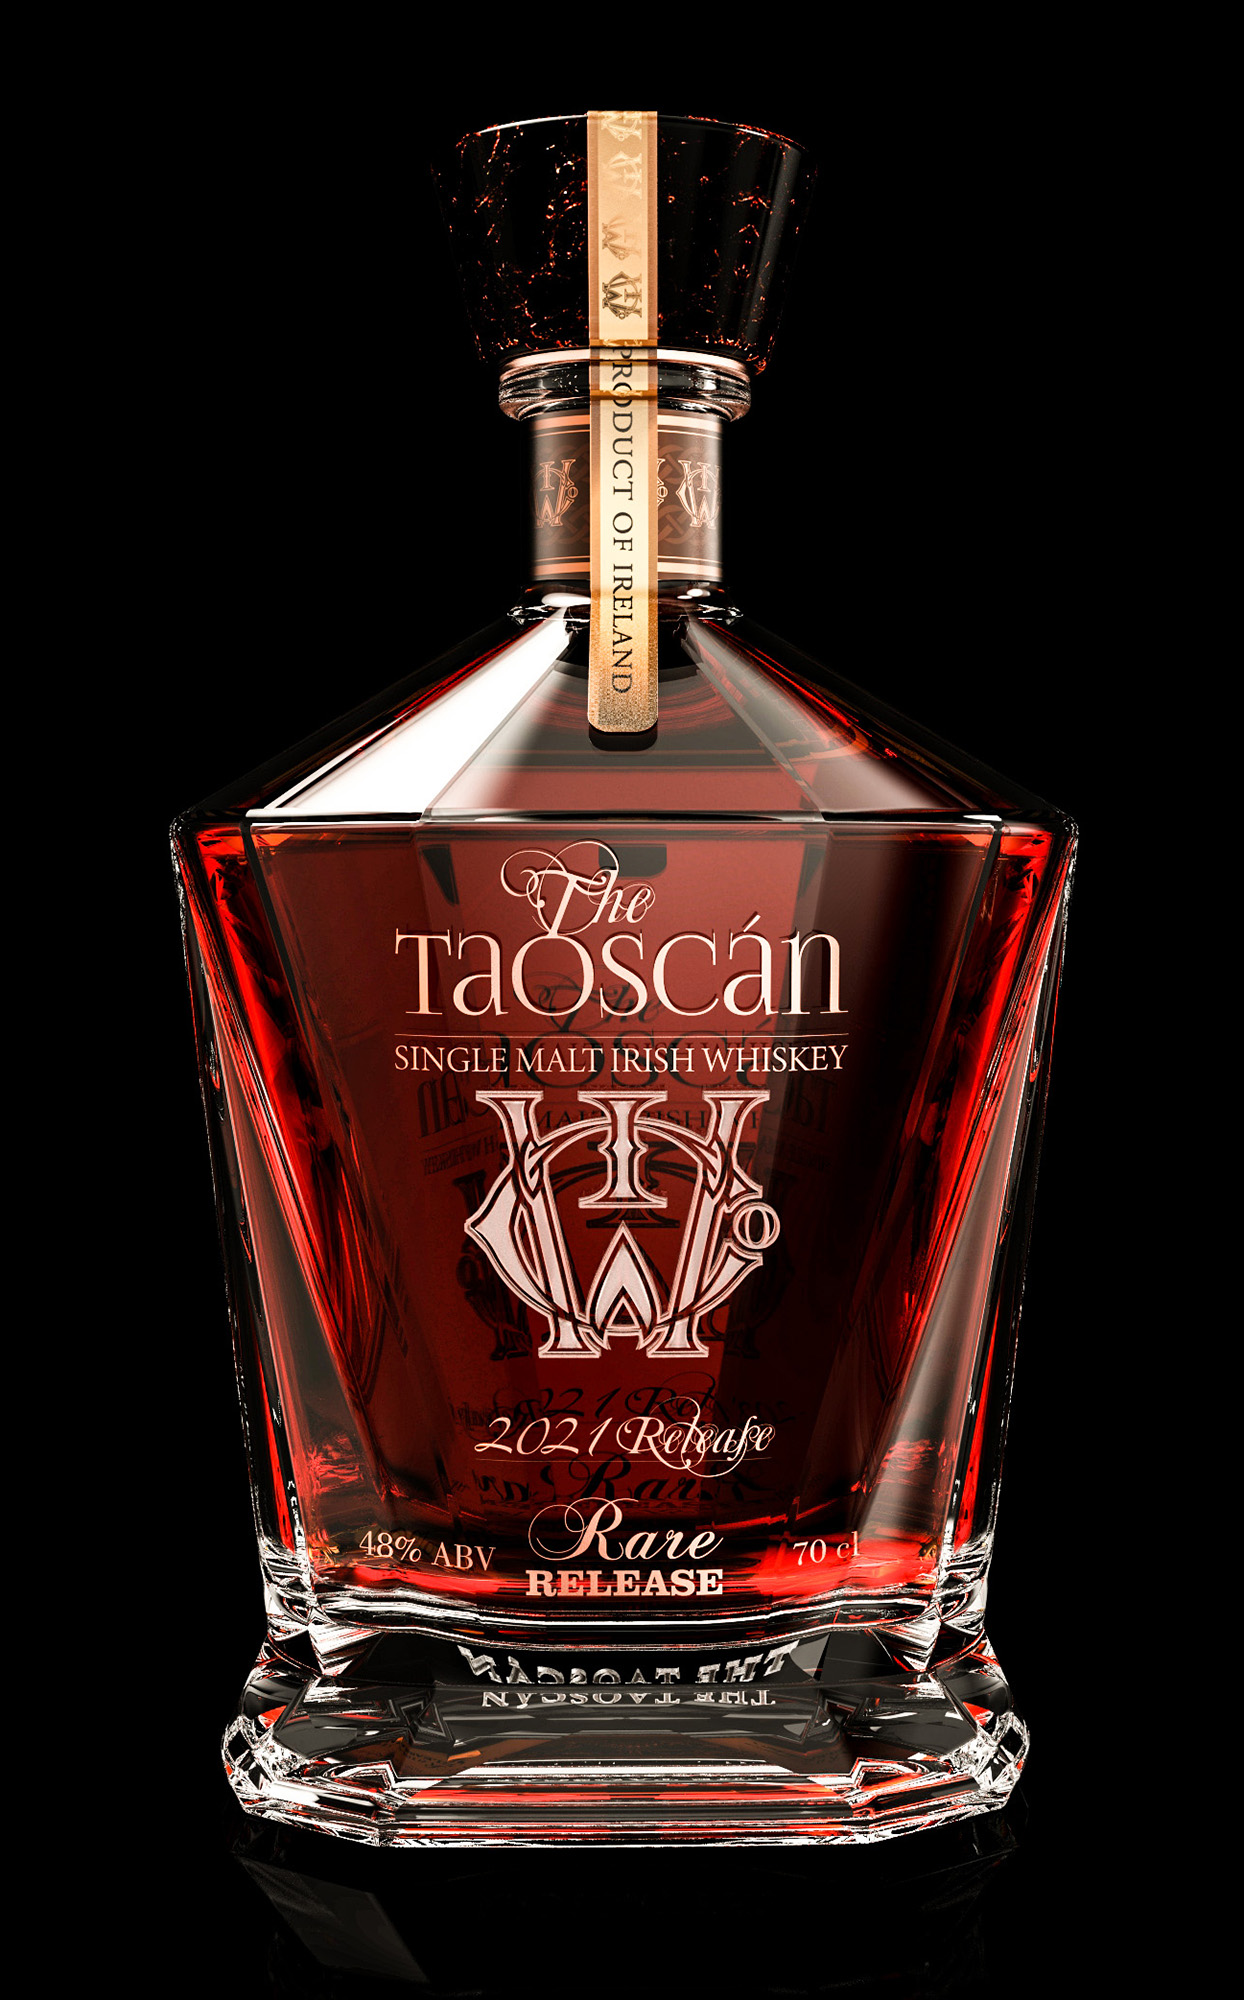 The Taoscán bottle